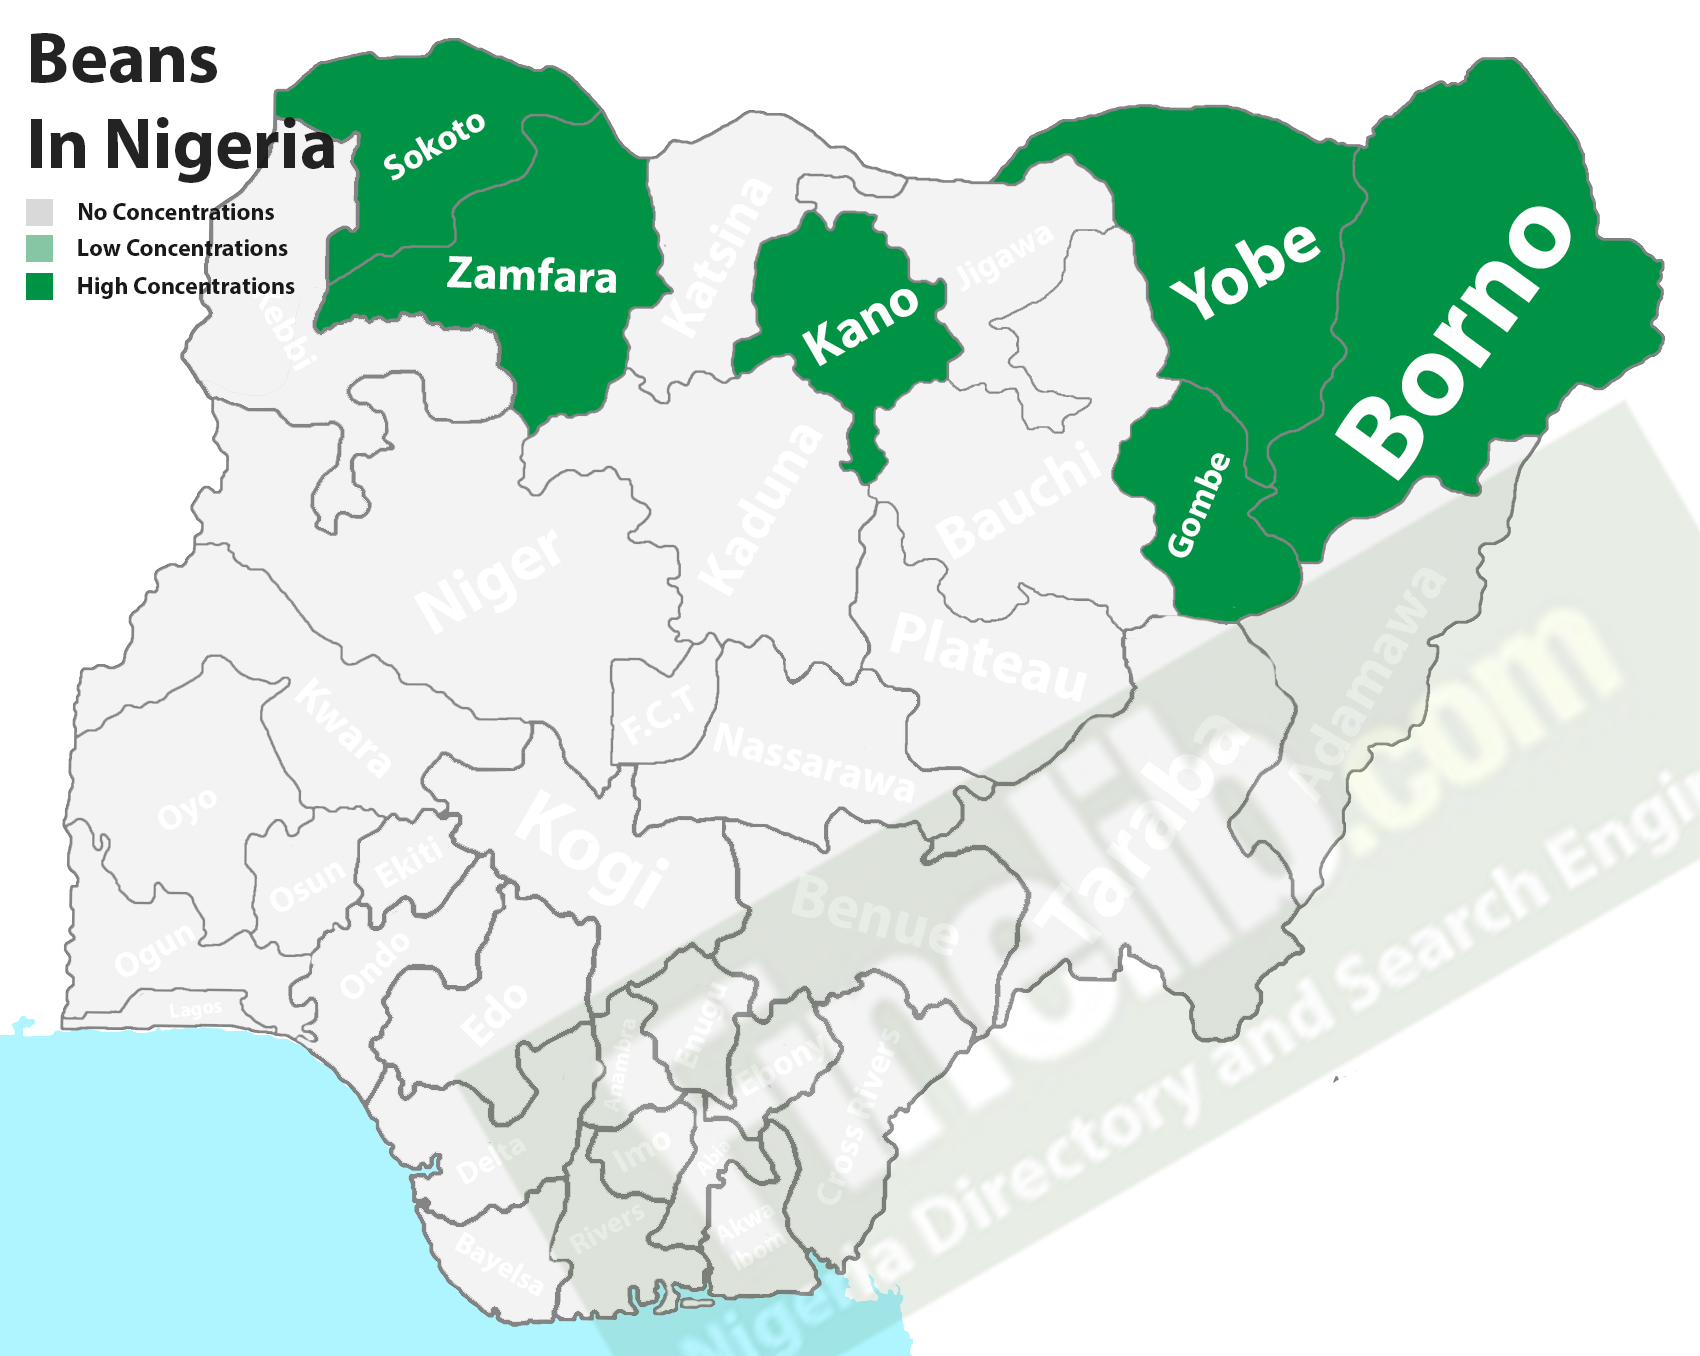 Bean producing states in Nigeria